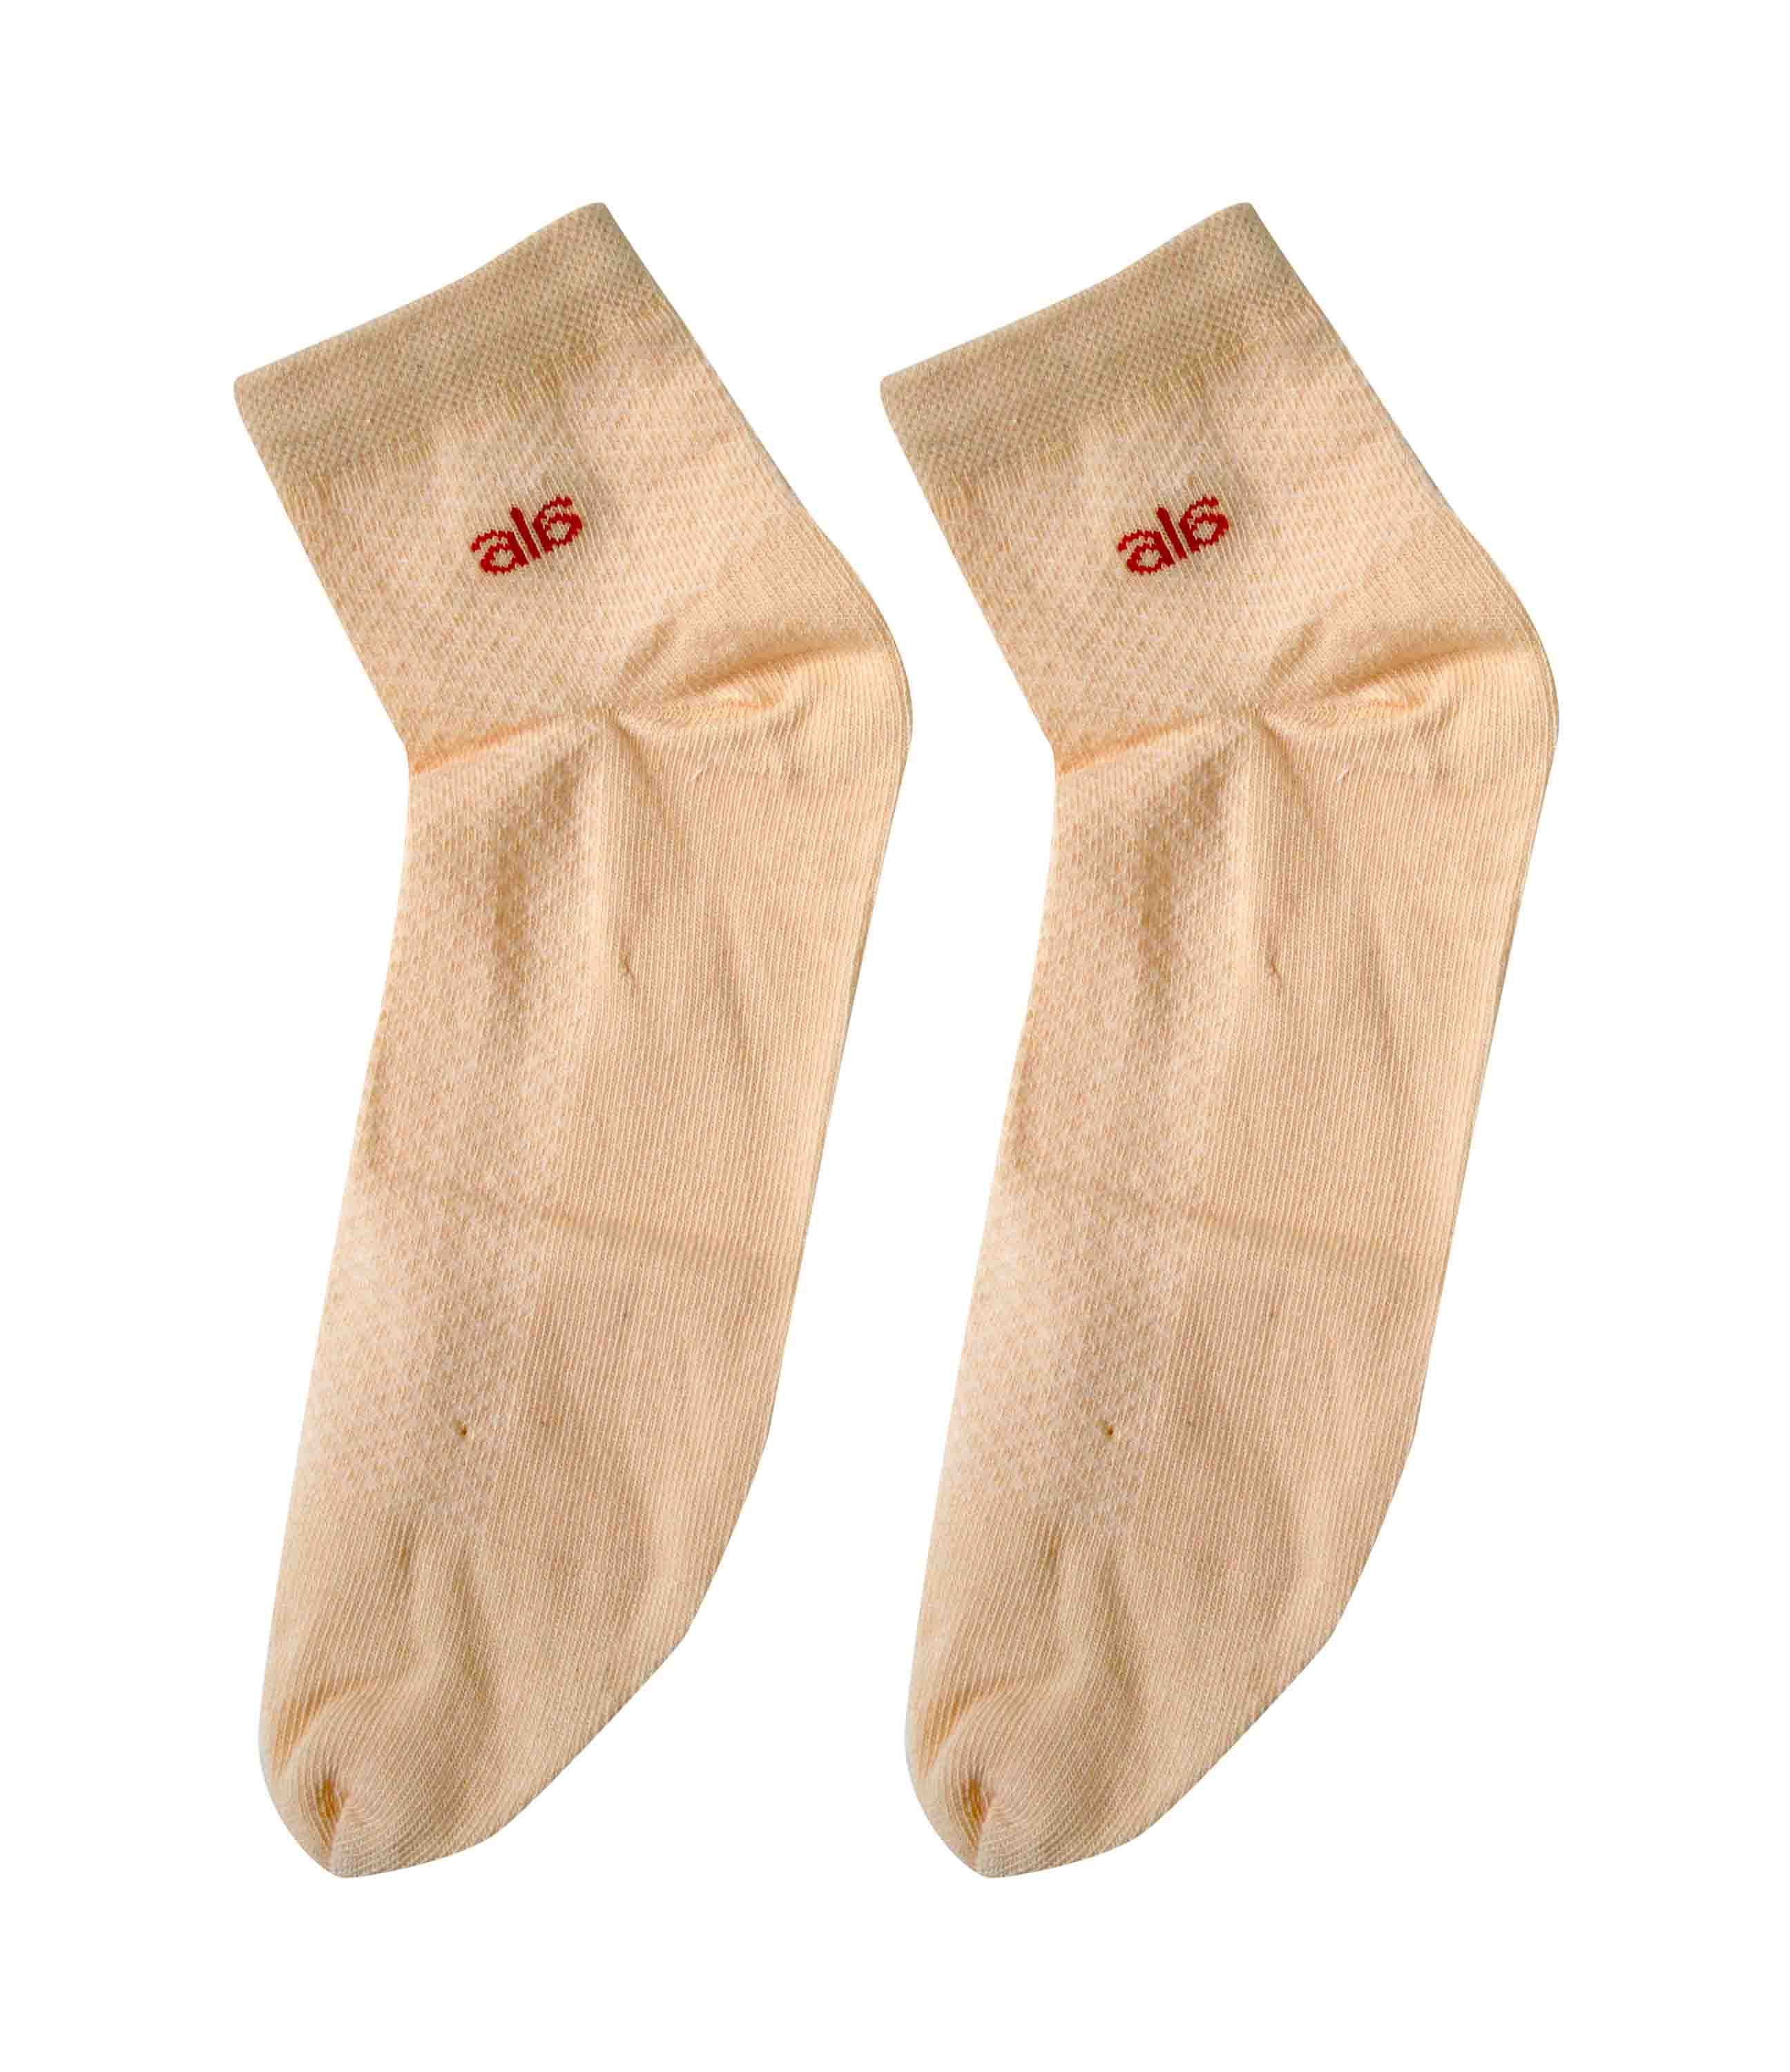 Ellie Wmn ankle Socks - Design-BG-Wmn-DESIGN-004-SKN